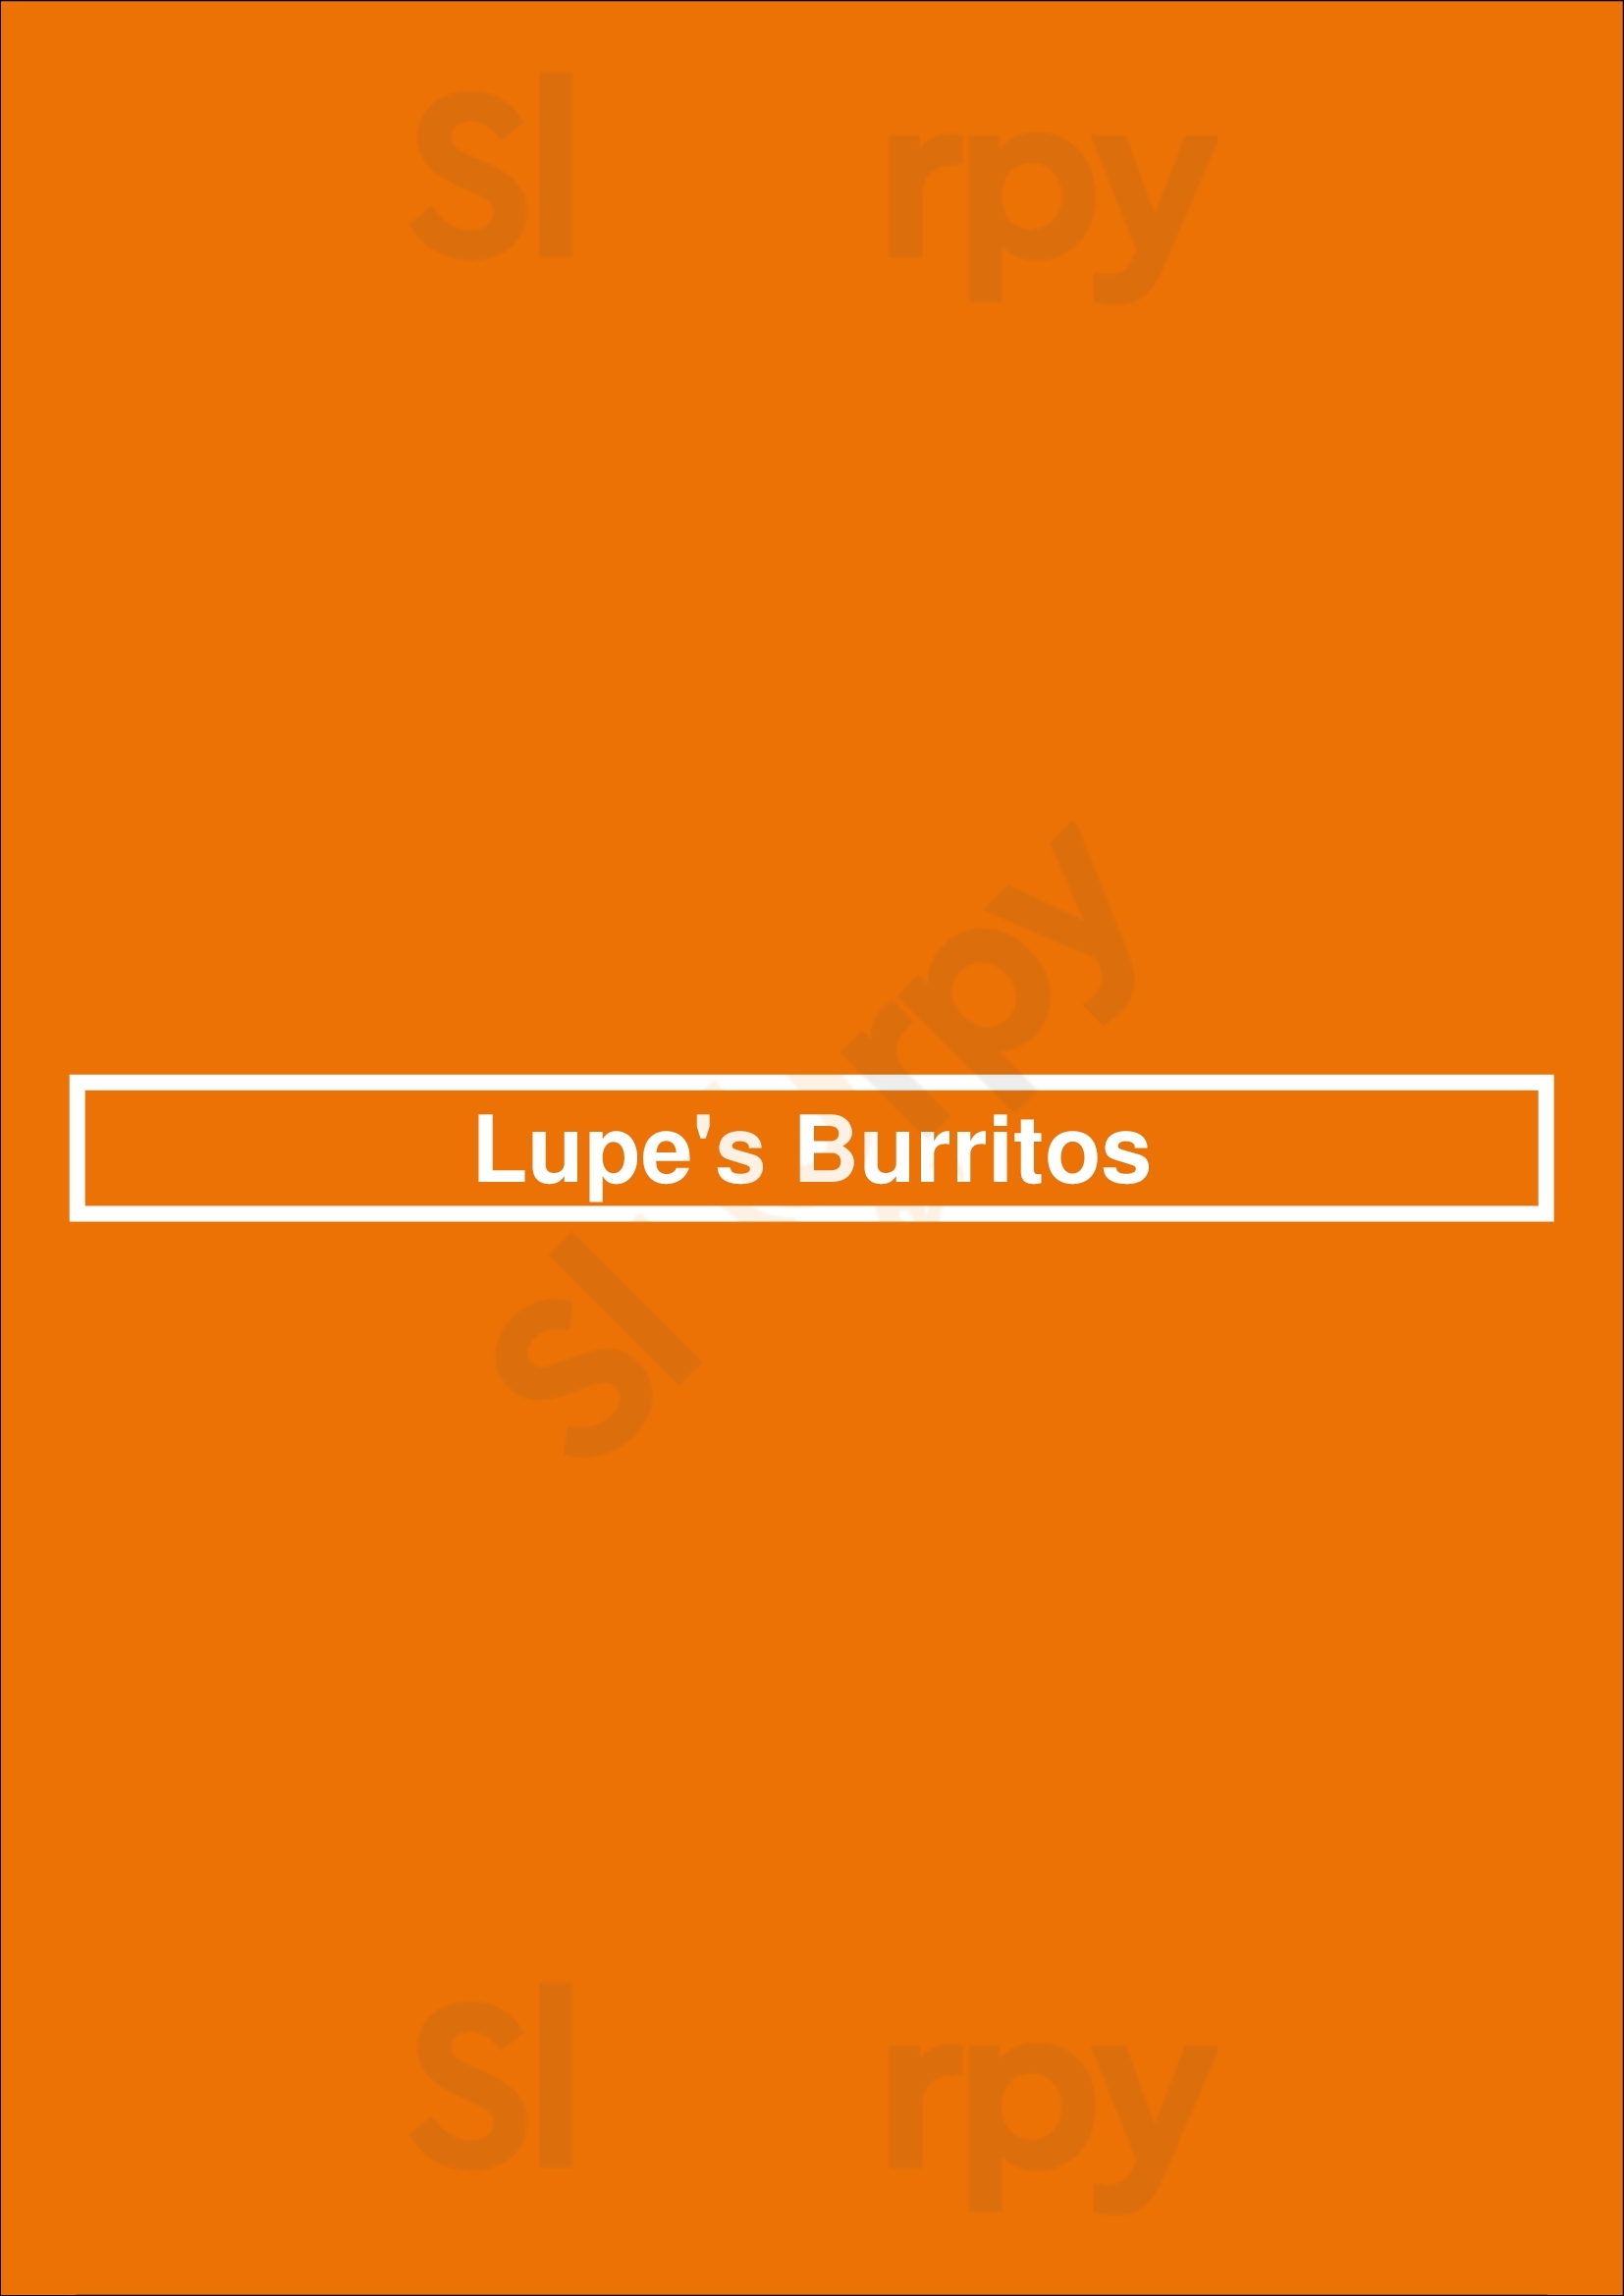 Lupe's Burritos Los Angeles Menu - 1